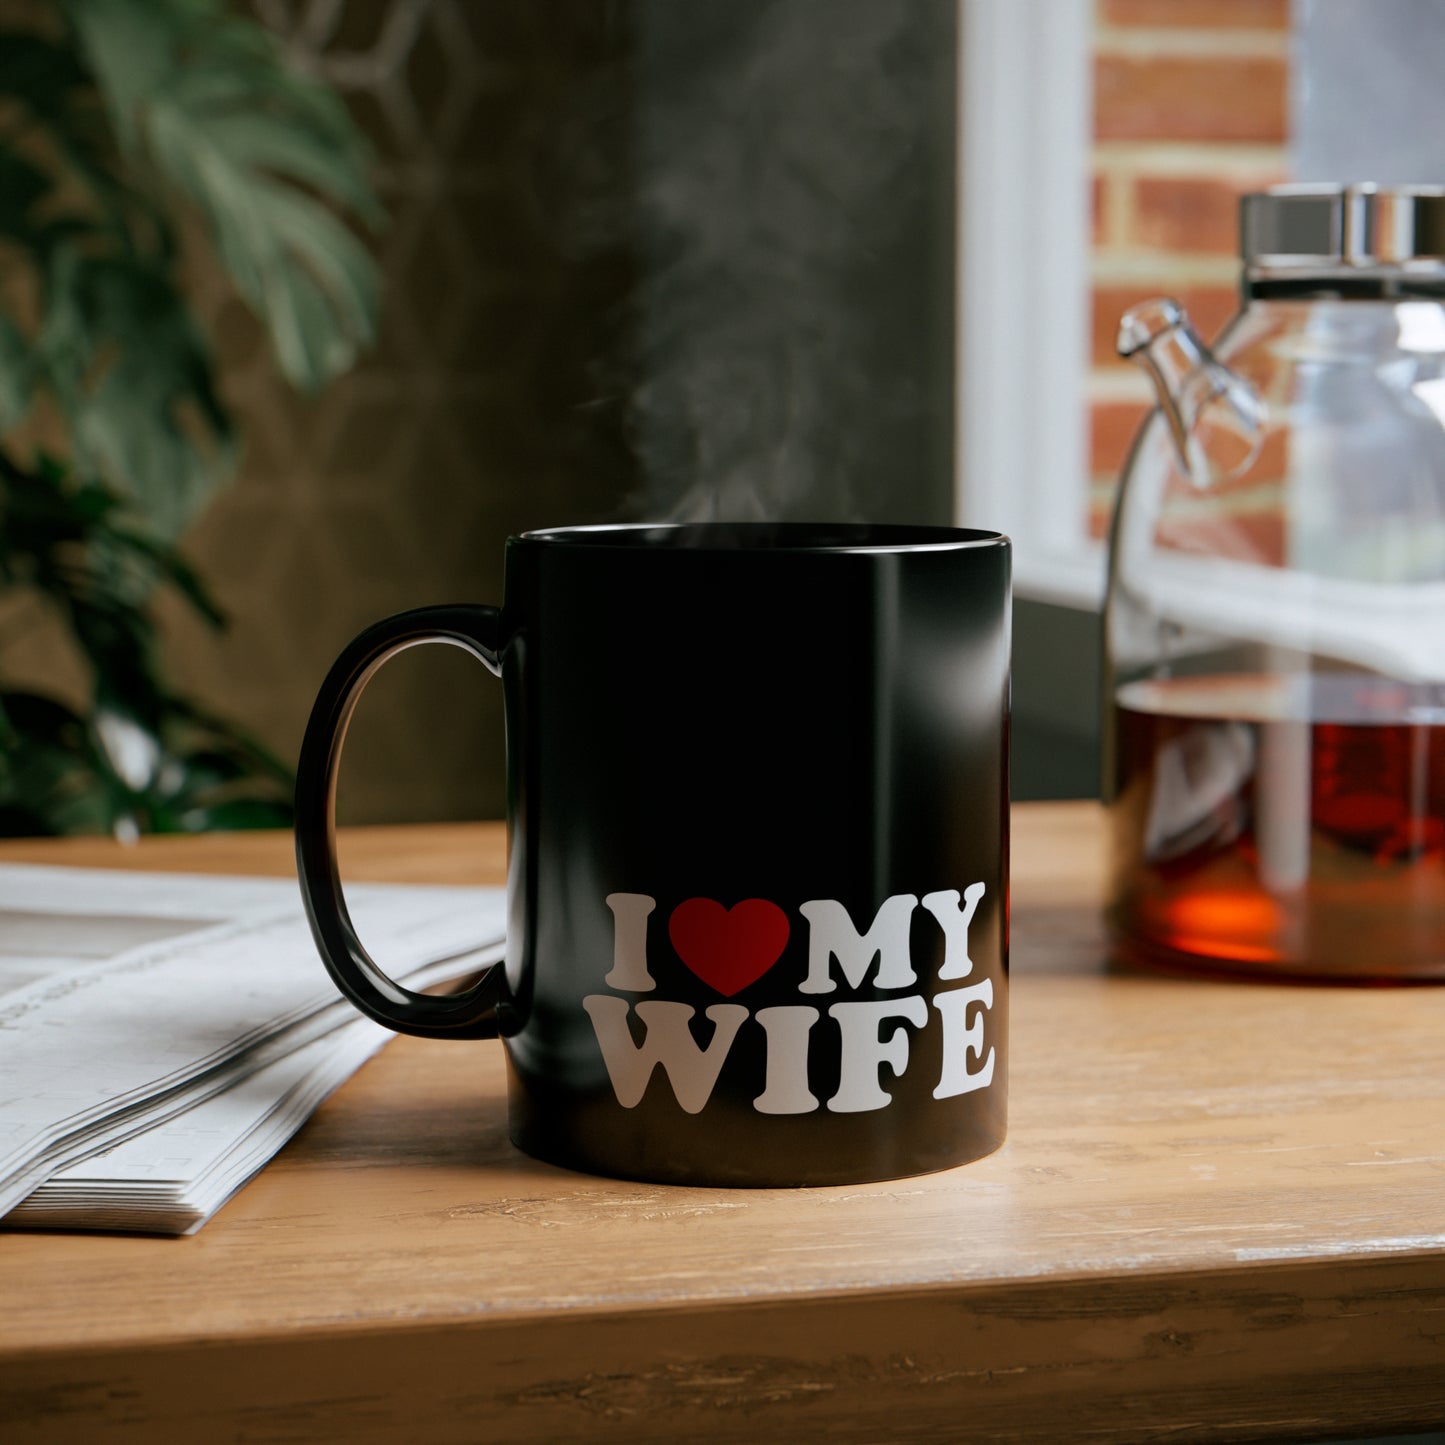 I Love My Wife 11oz Black Mug